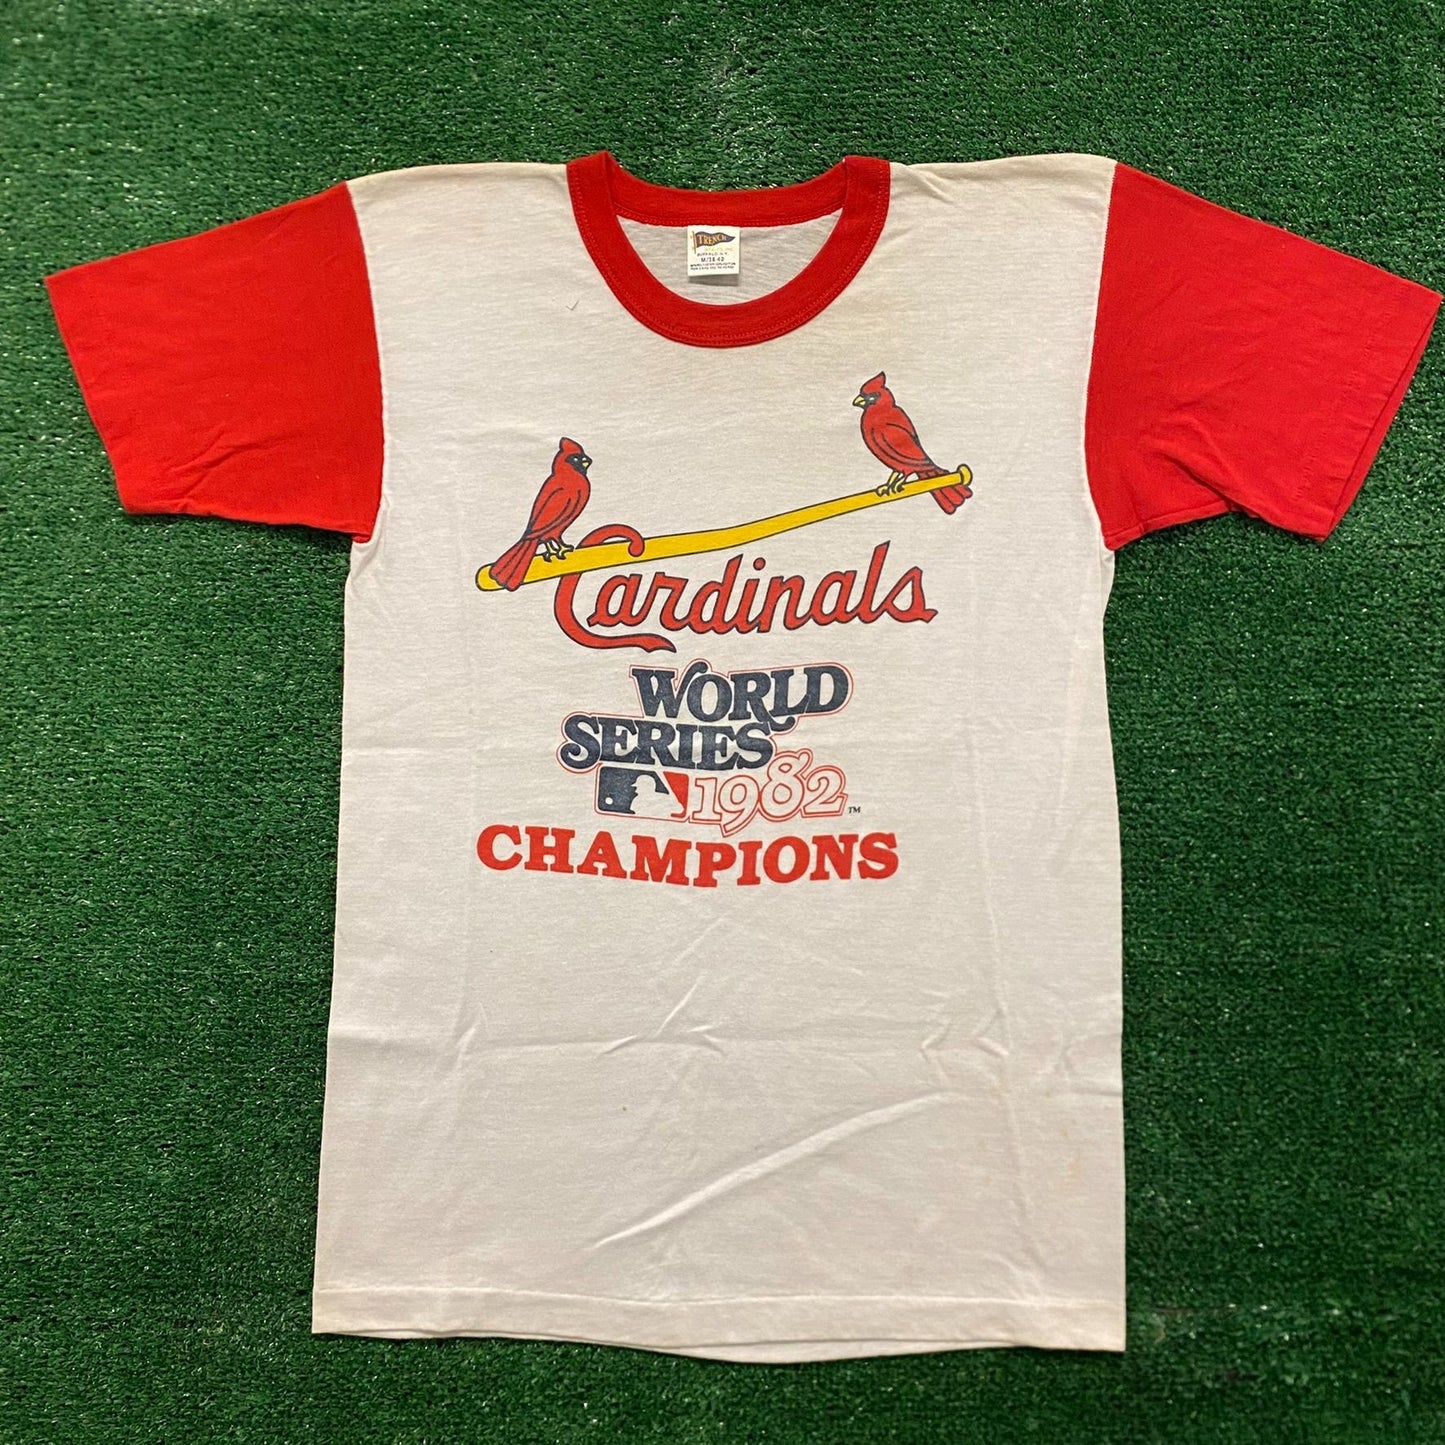 St. Louis Cardinals Baseball Vintage 80s T-Shirt